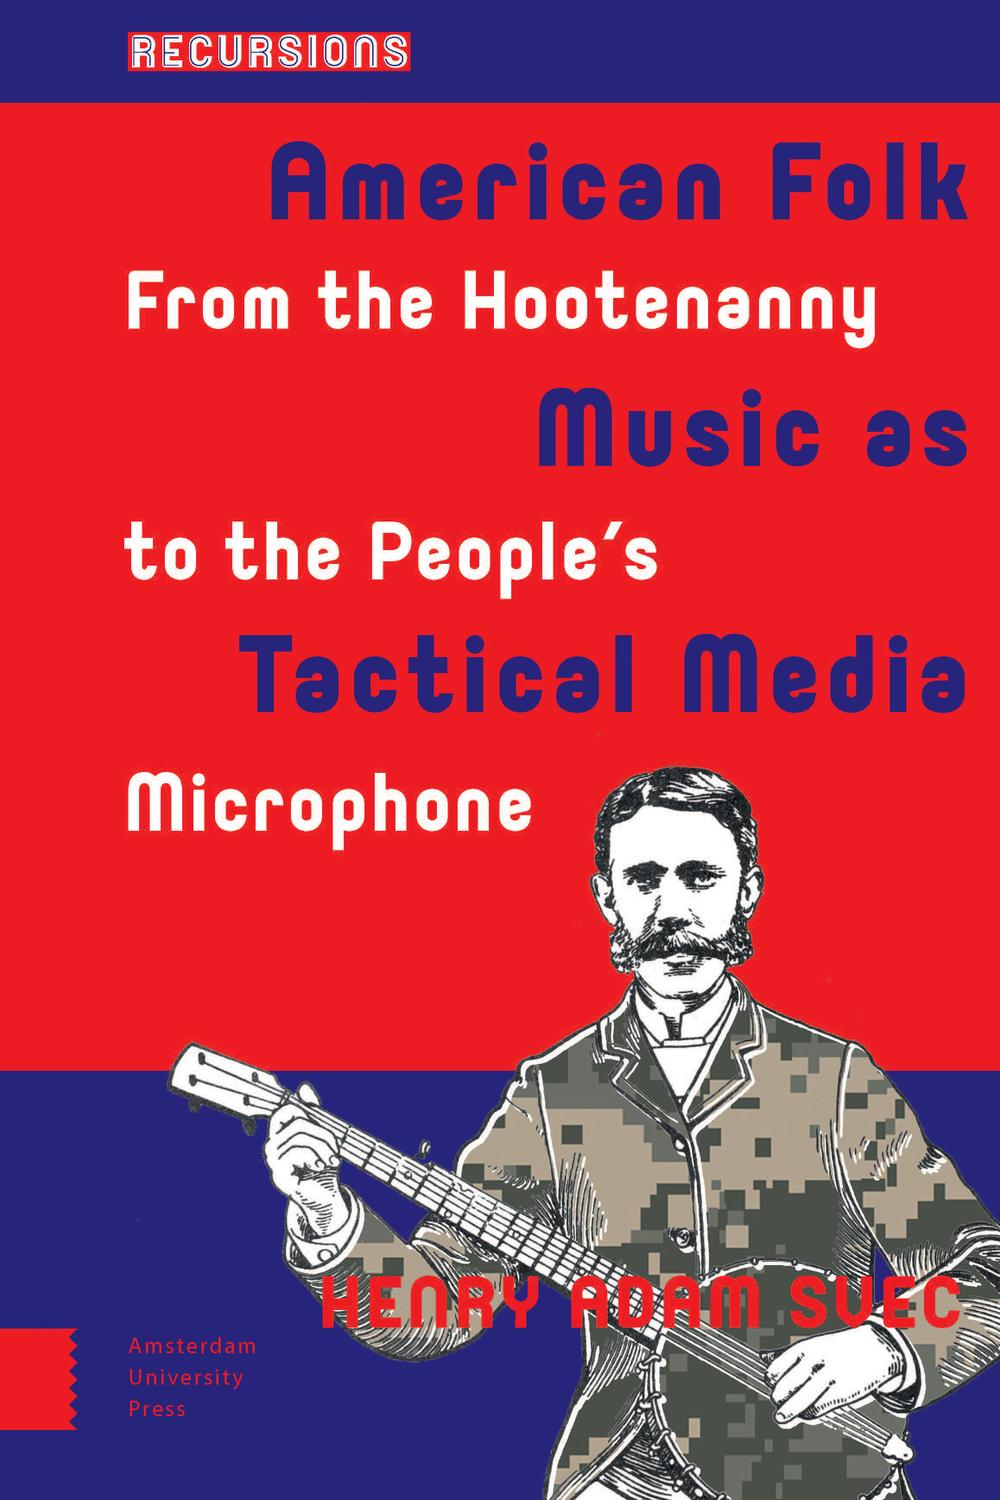 American Folk Music as Tactical Media - Henry Adam Svec